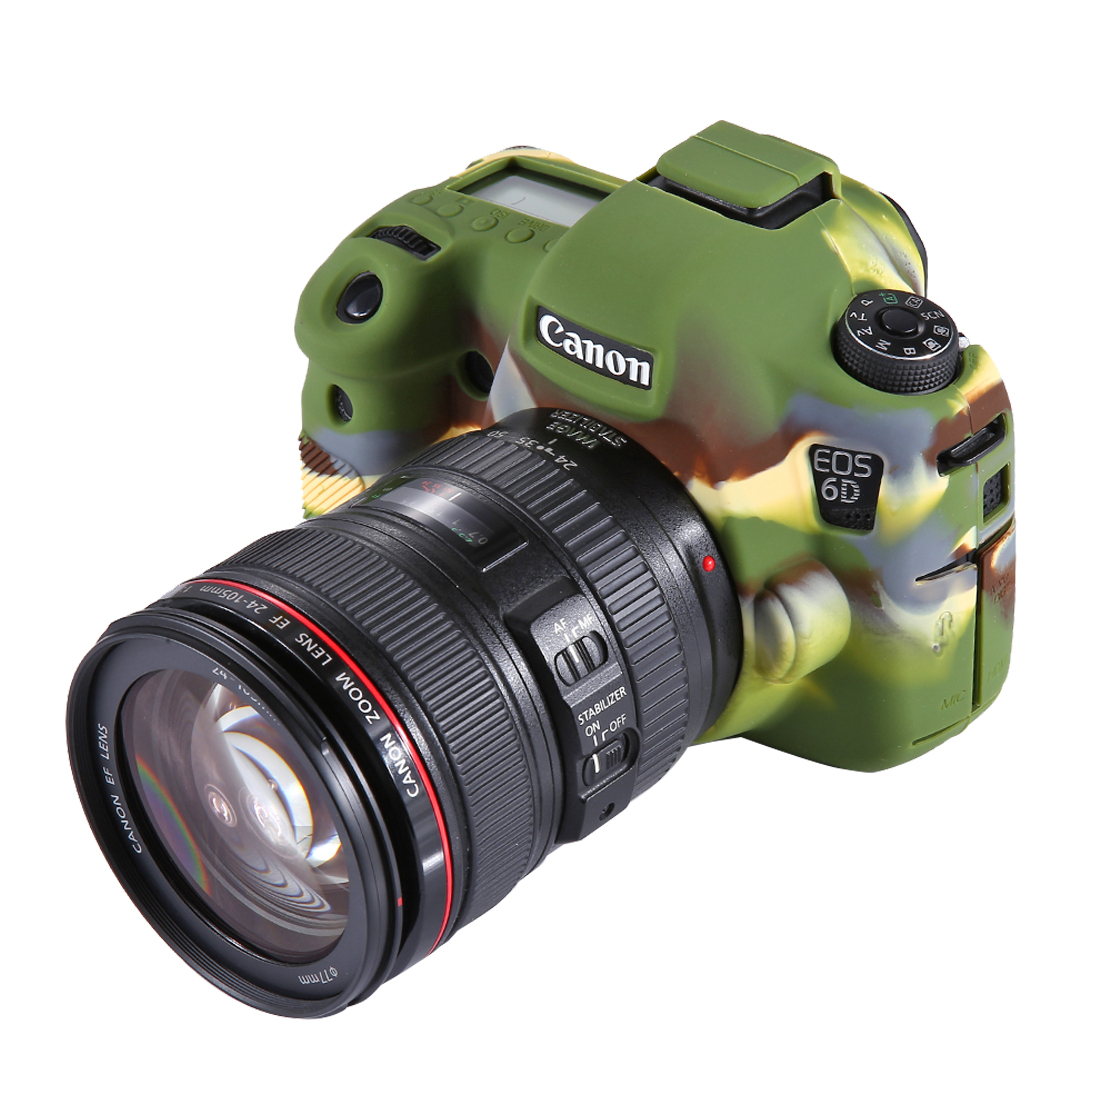 

PULUZ PU7101 Soft Silicone Protective Case for Canon EOS 6D DSLR Camera